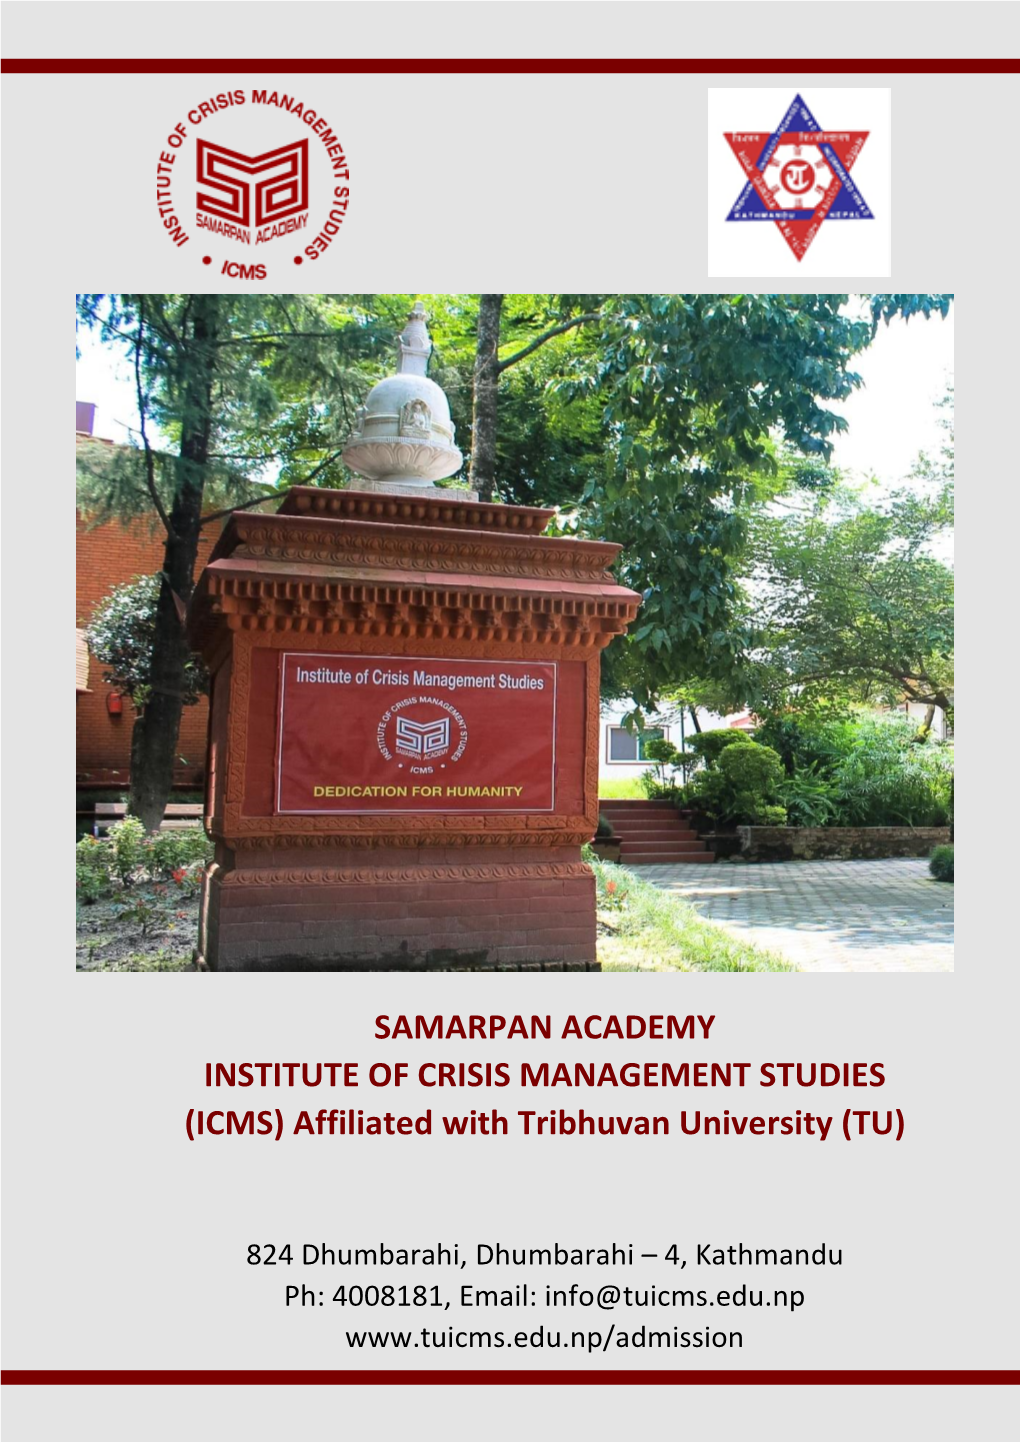 ICMS) Affiliated with Tribhuvan University (TU